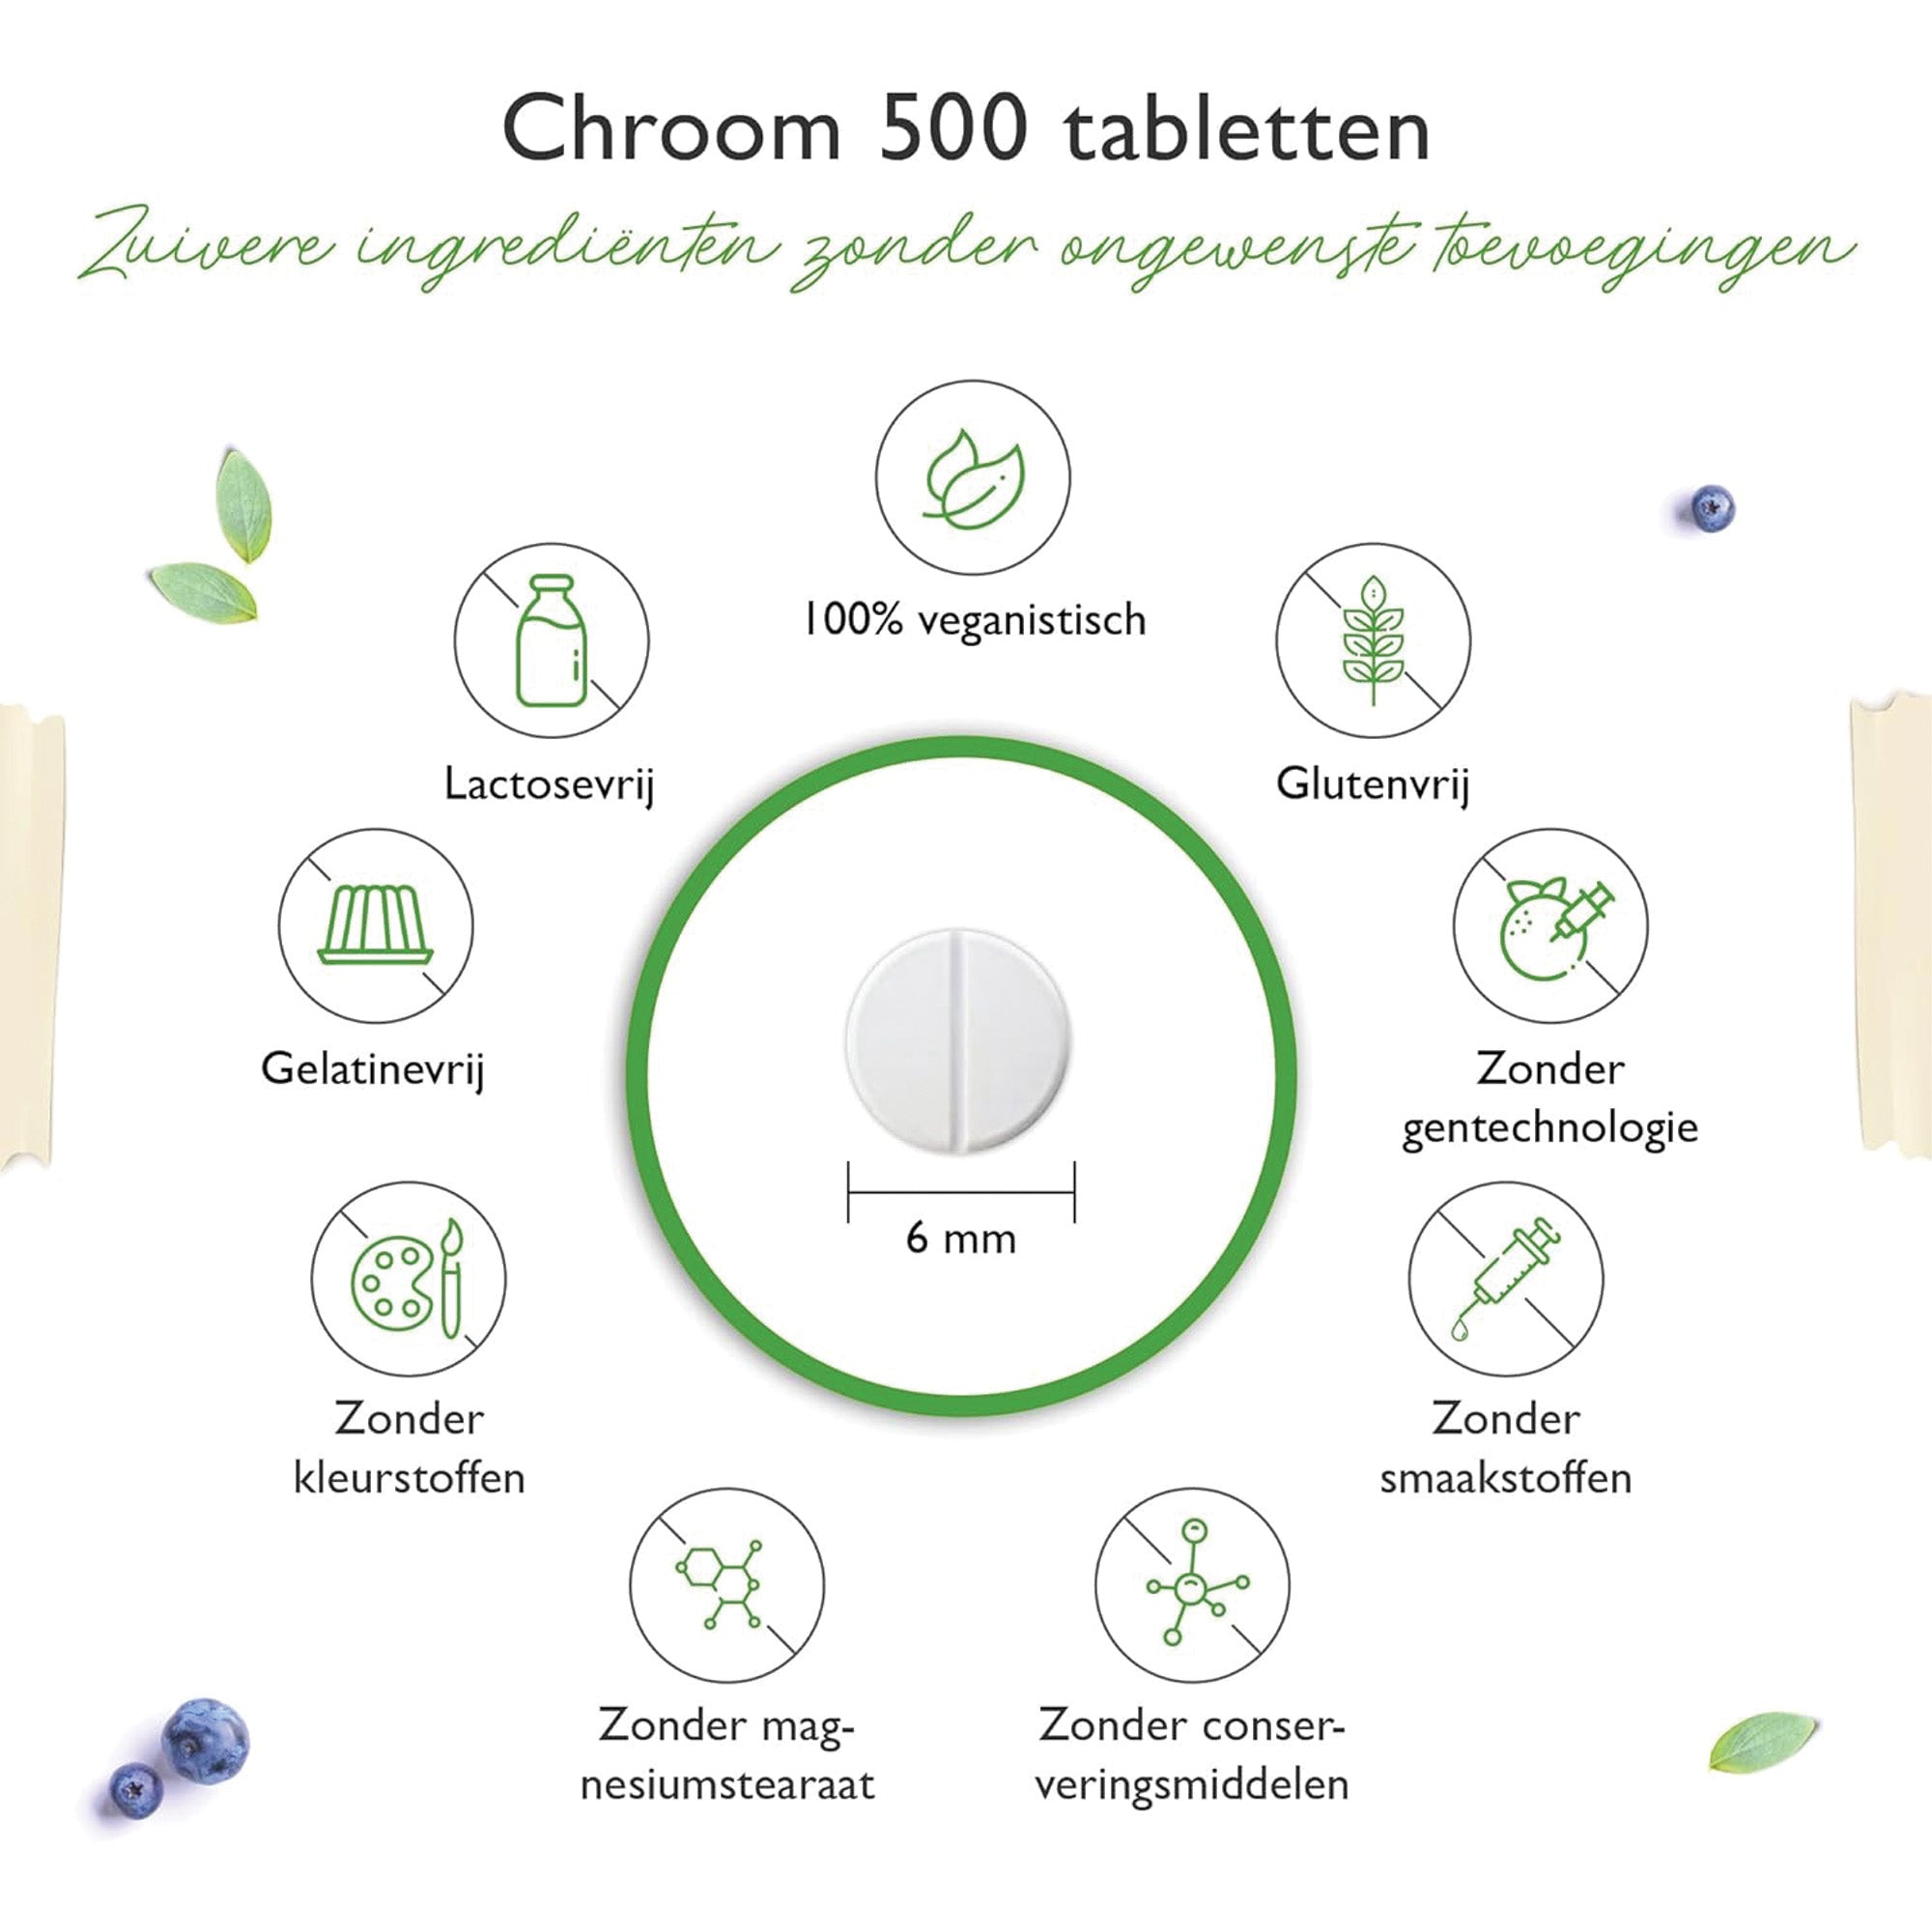 Vit4ever | Chroom / Chromium uit chroompicolinaat | Extra hoge dosis 500 mcg chroom per tablet | 365 tabletten | Geen ongewenste toevoegingen | Hoge dosis | Veganistisch